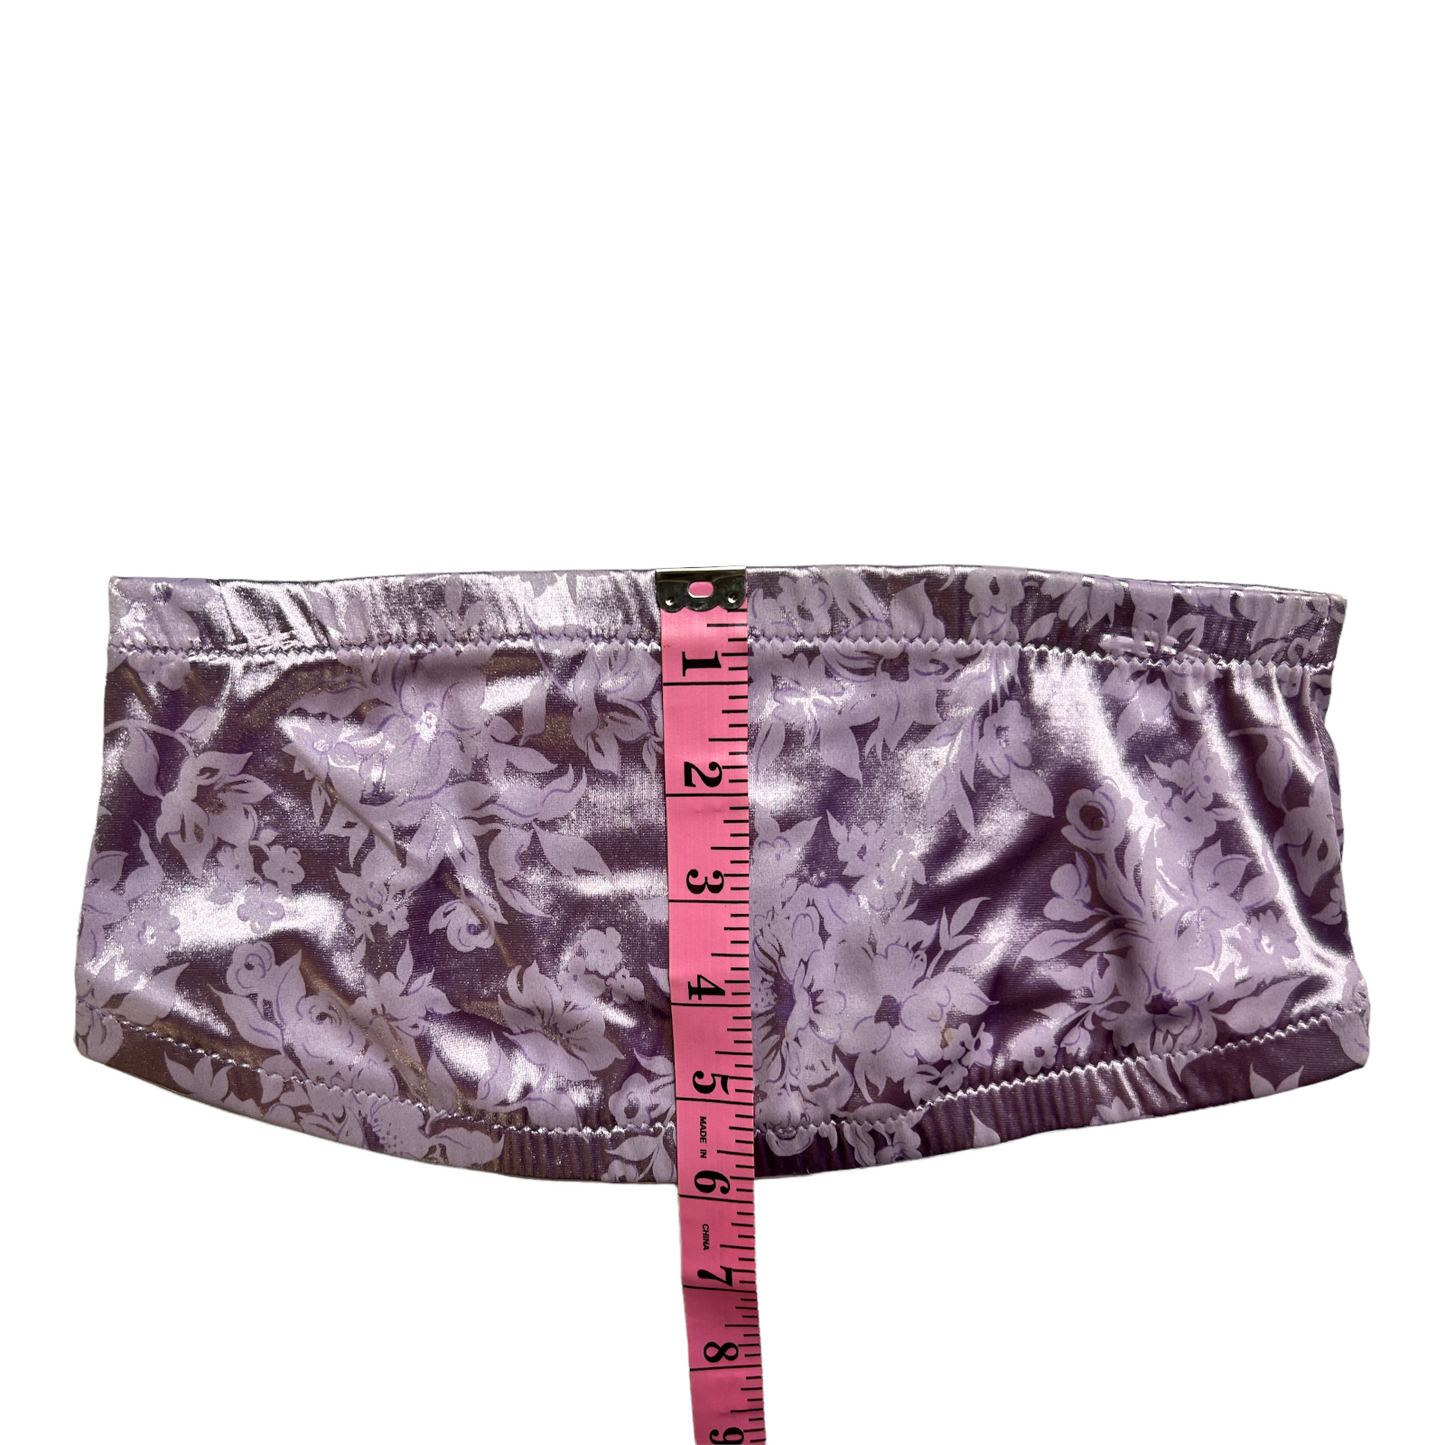 New Extreme Gear Lavender Strapless Bralette Swimwear Top, Size M